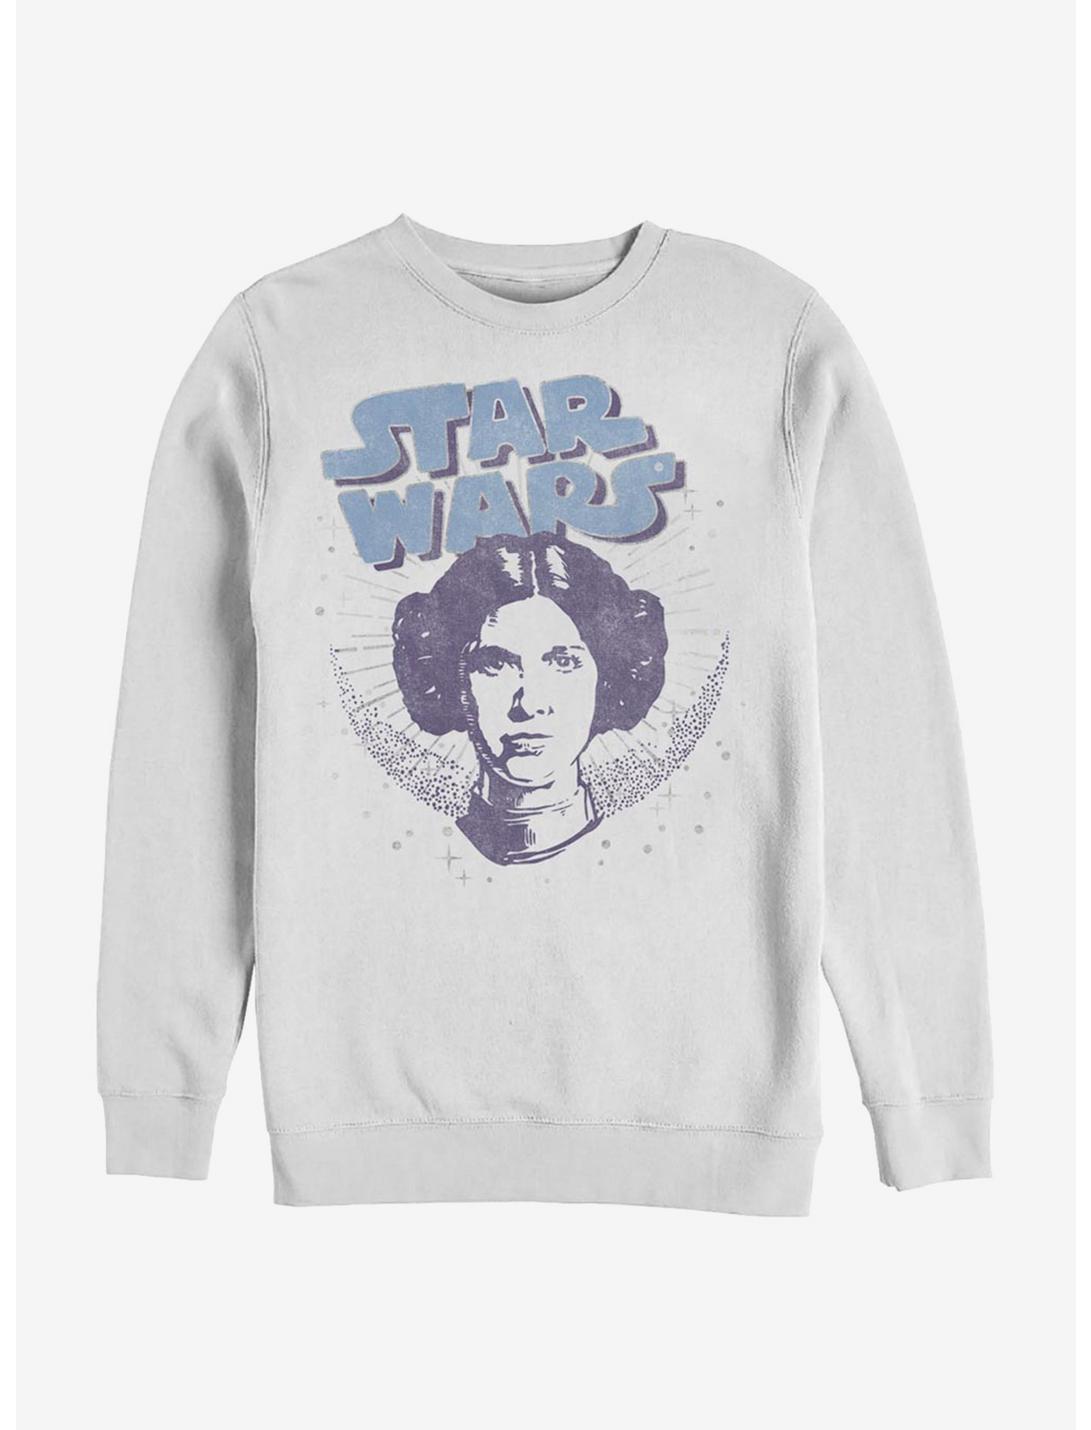 Star Wars Leia Moon Sweatshirt, WHITE, hi-res